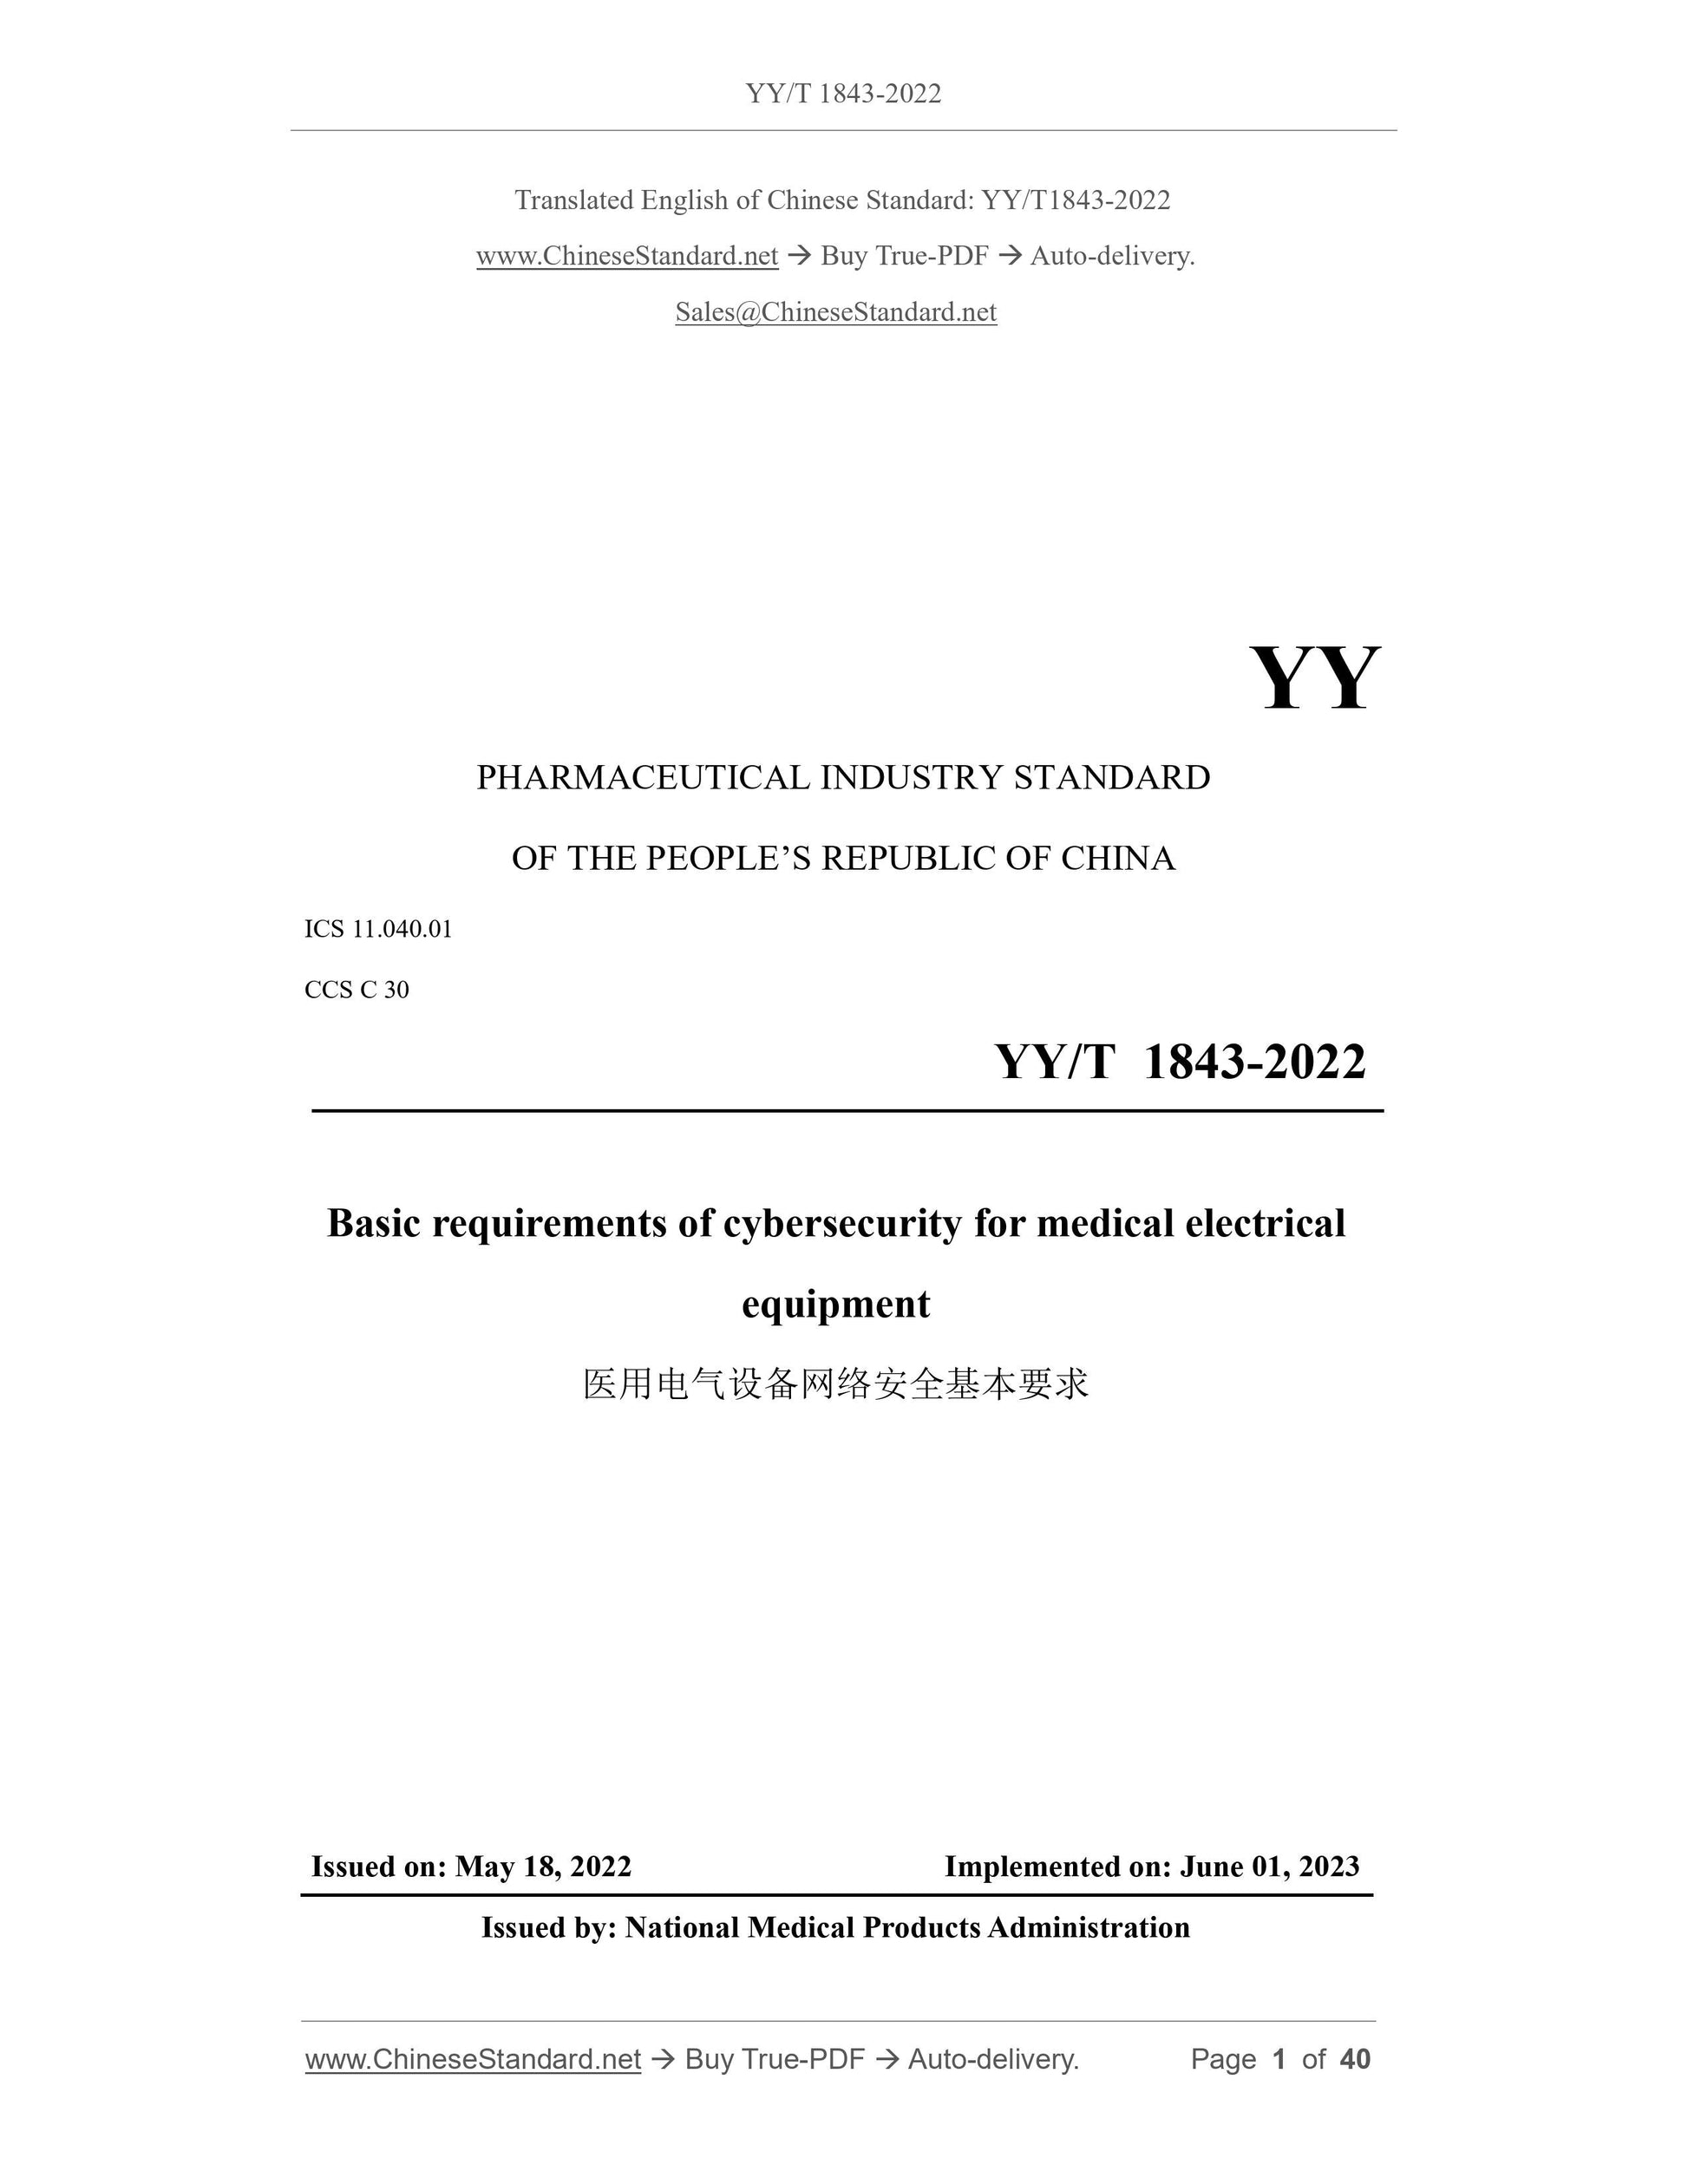 YY/T 1843-2022 Page 1